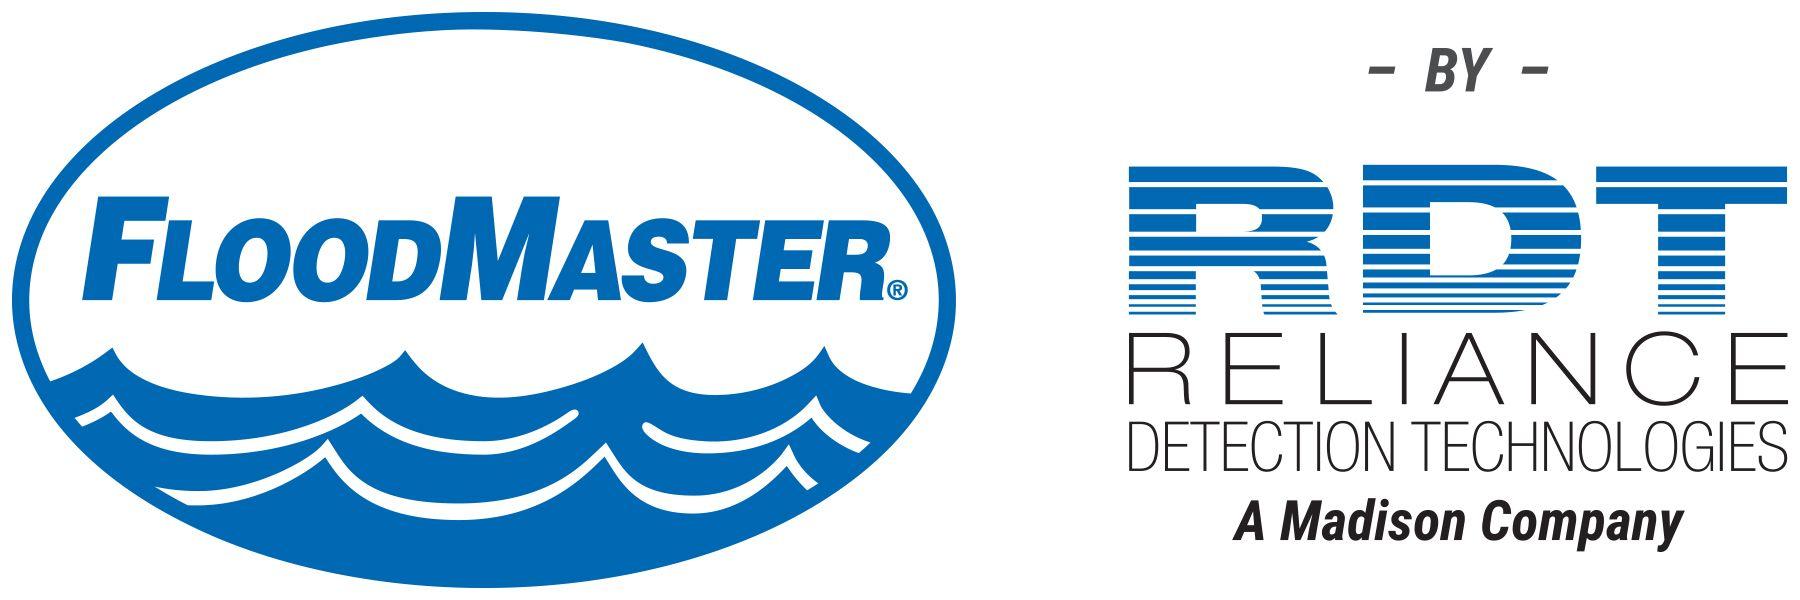 RDT Logo - Reliance Detection Technologies